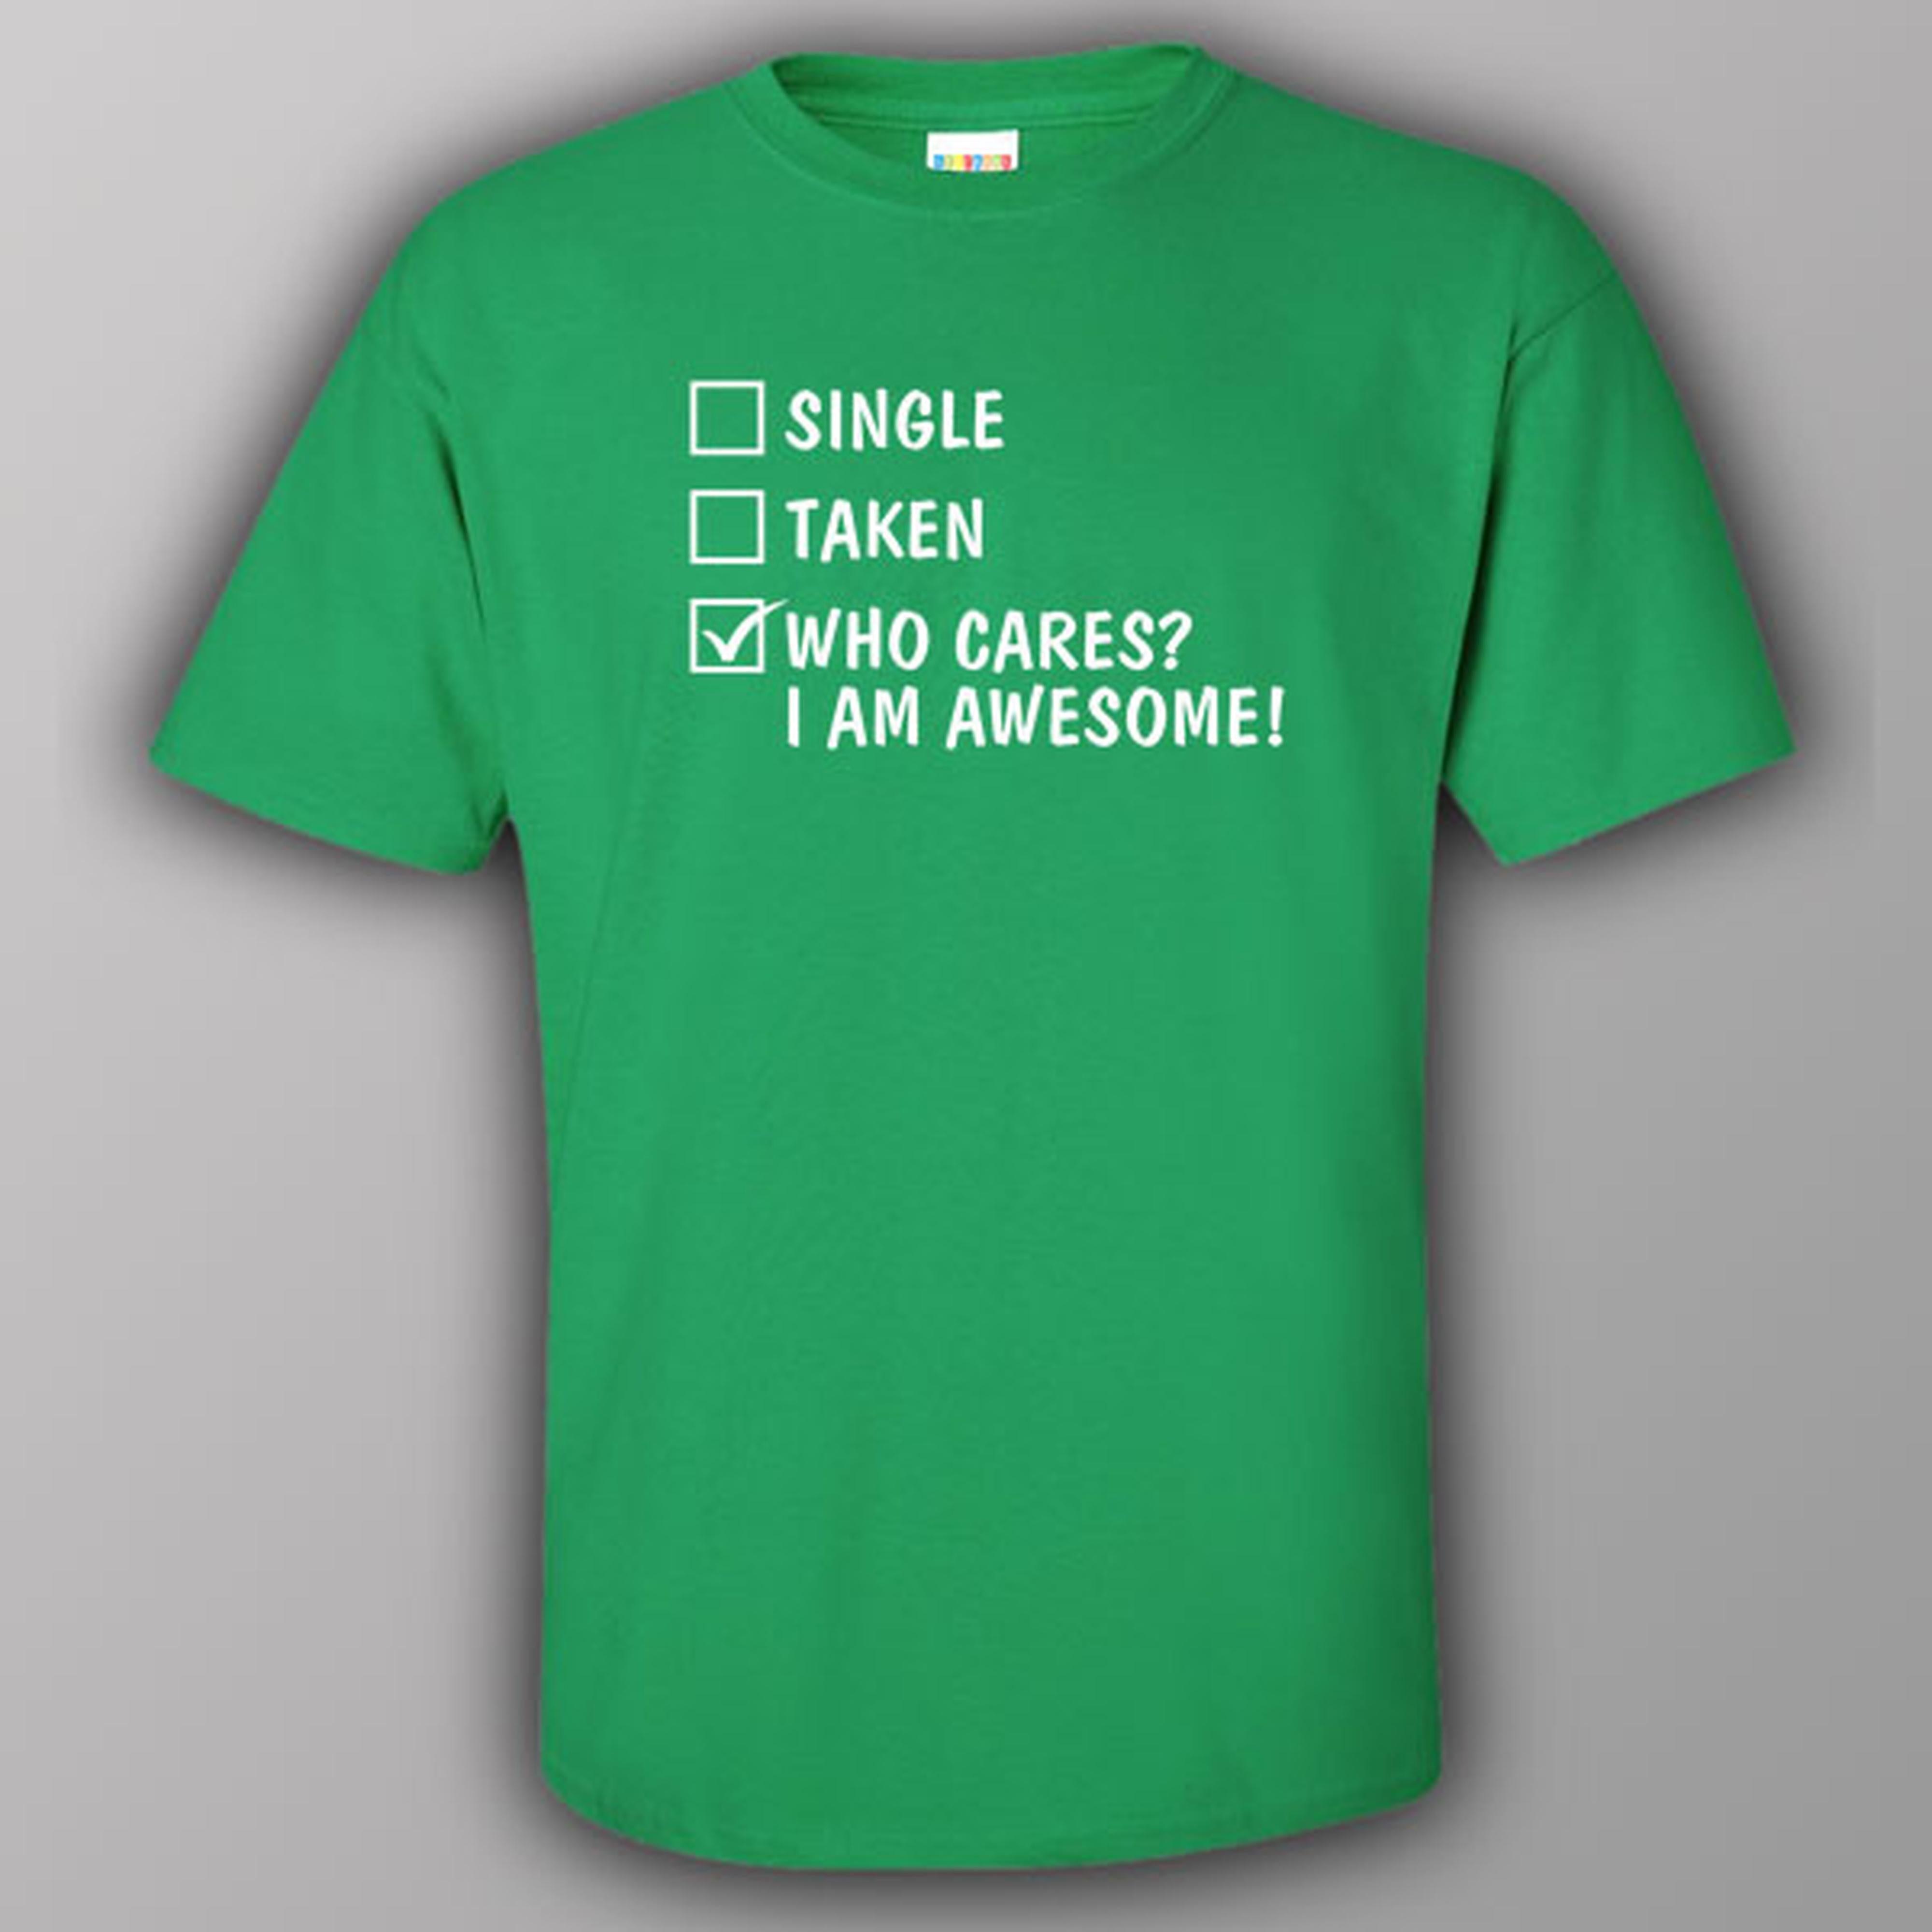 Single - Taken - Who cares? I am awesome! - T-shirt